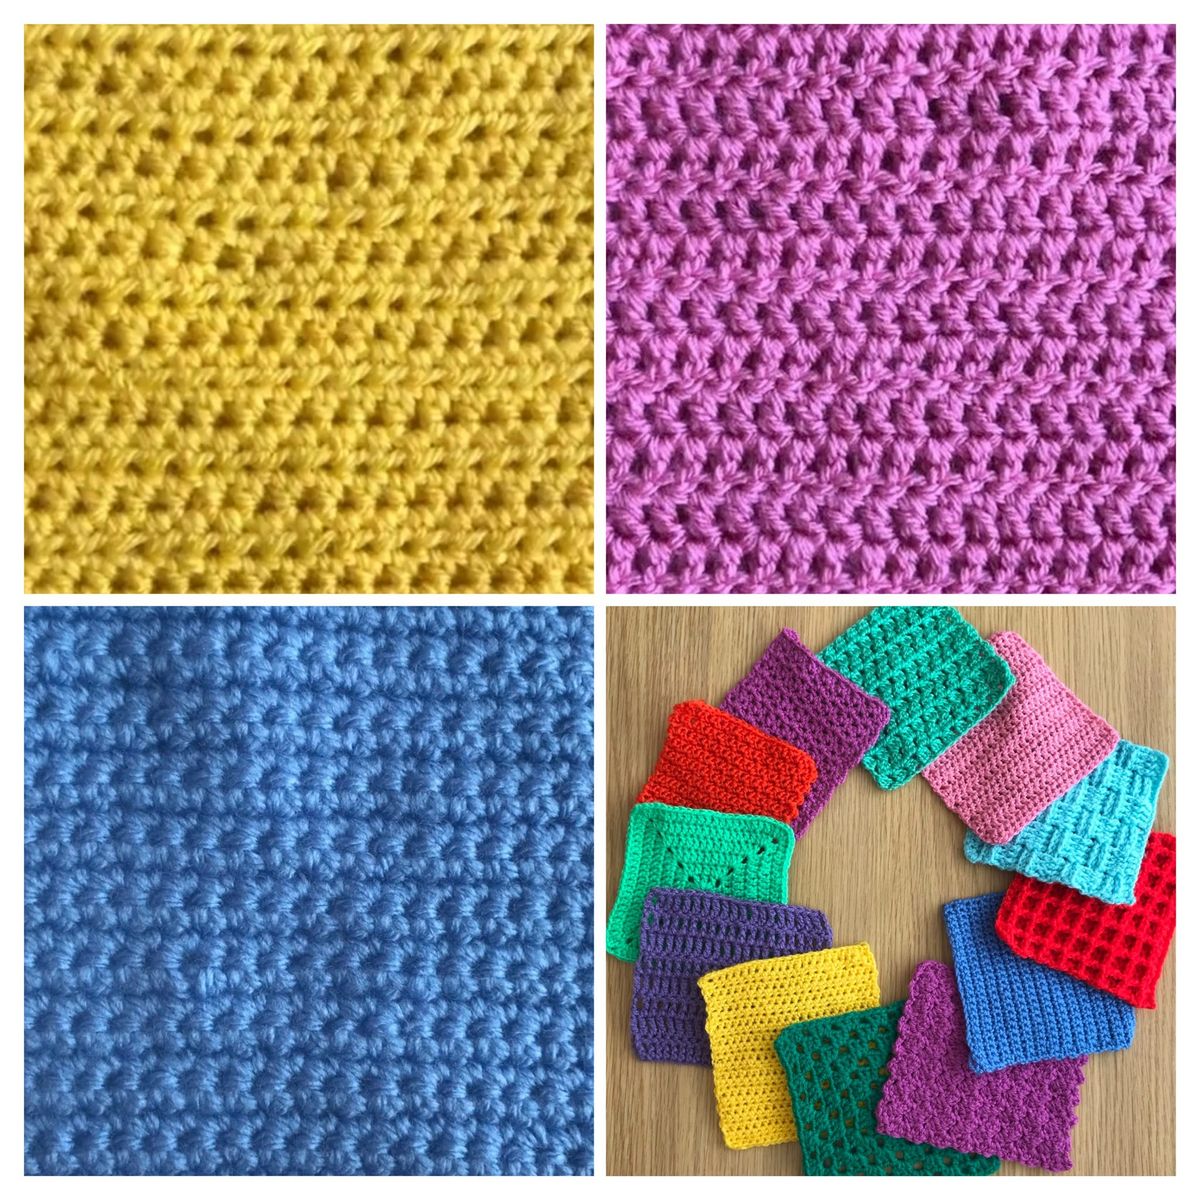 Beginners Crochet techniques workshop - part 1